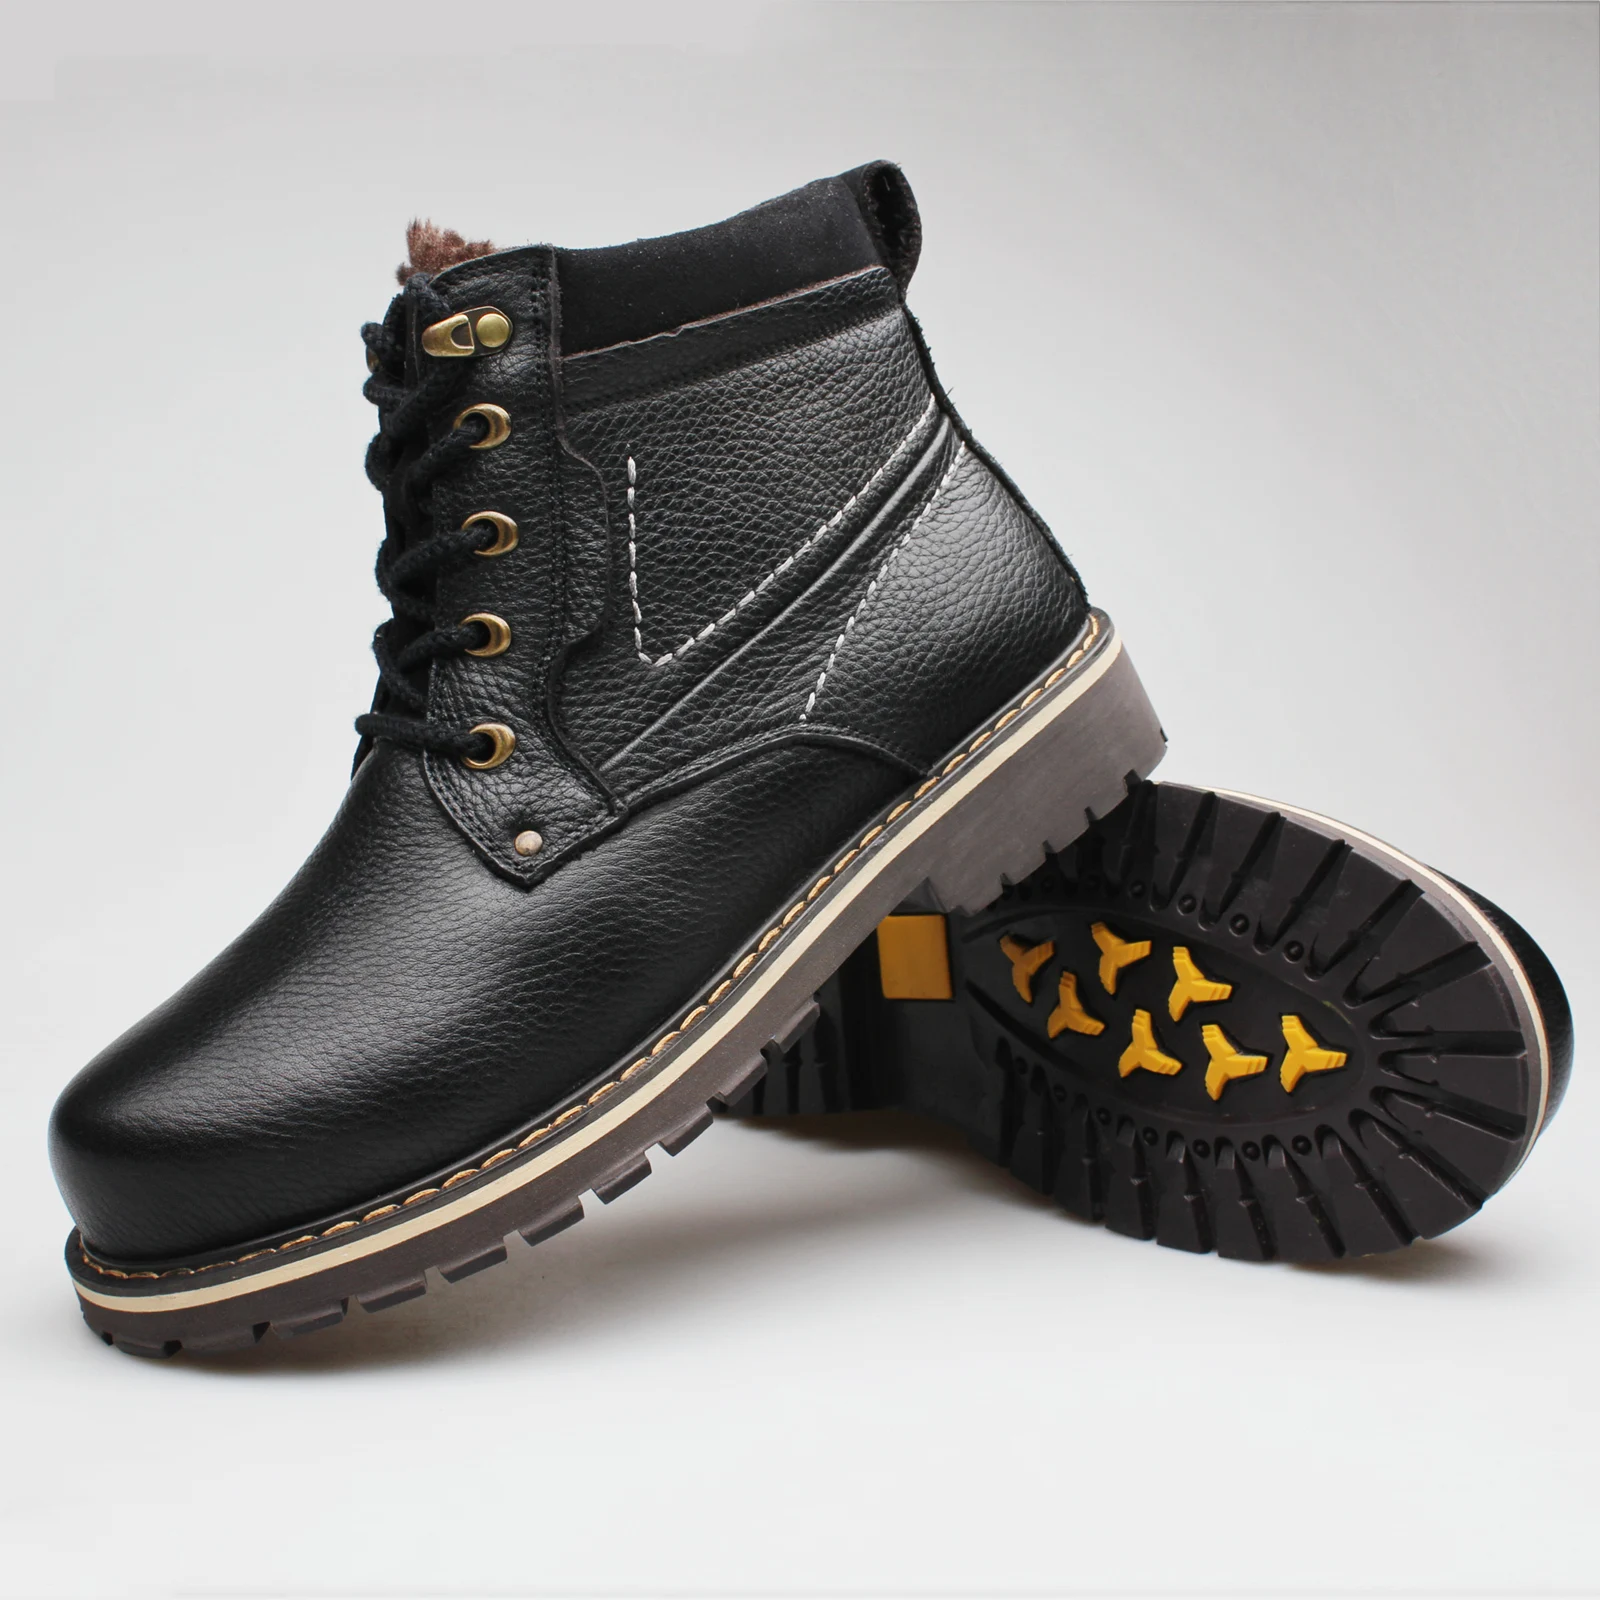 Genuine leather Men Winter Shoes Warm Handmade Snow boots Full Grain Lea... - $112.09